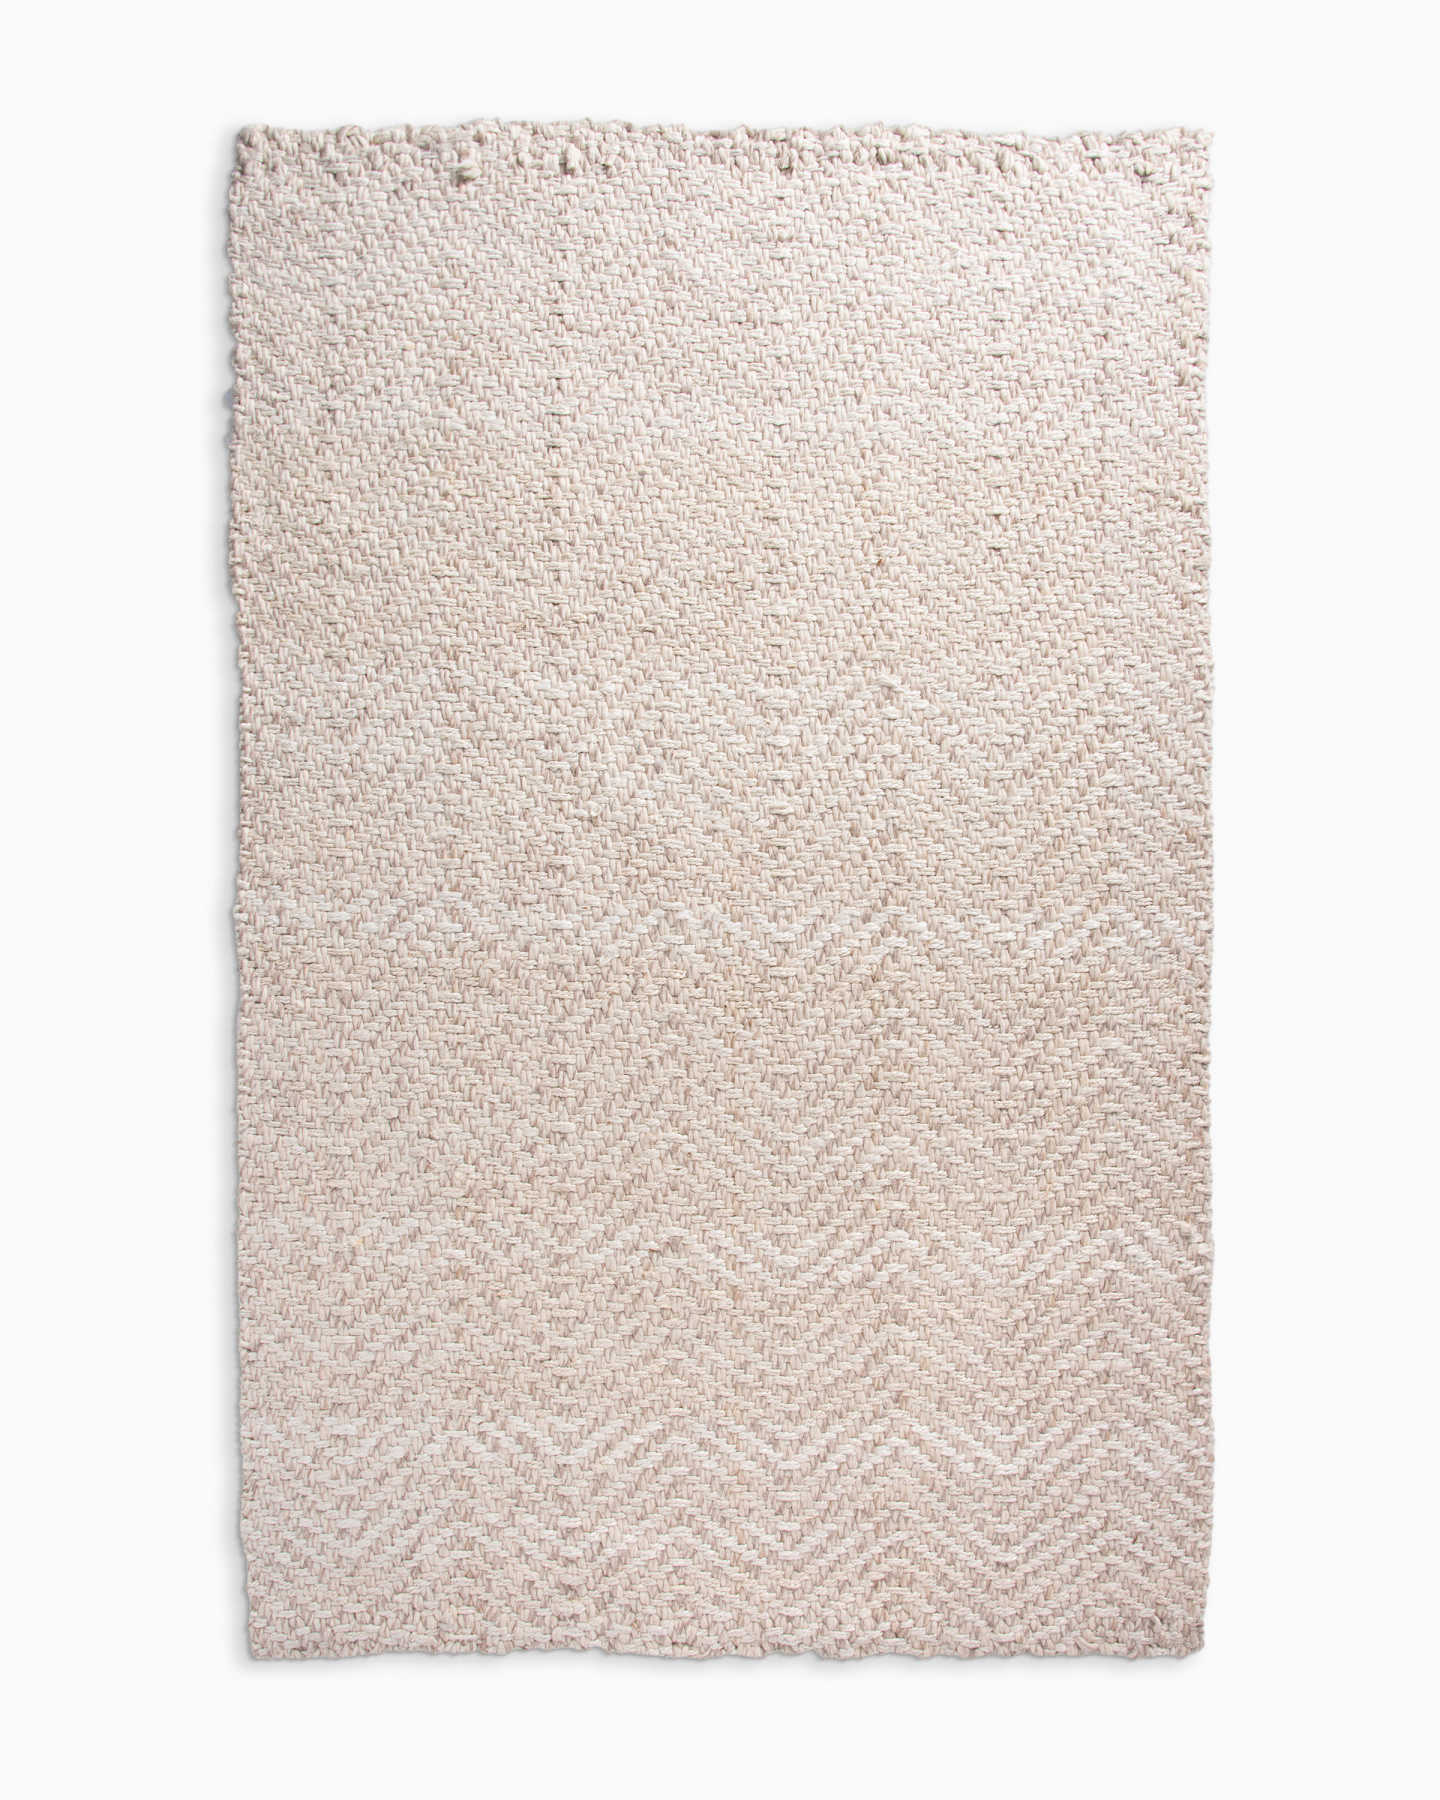 Wool & Jute Herringbone Rug - Natural/White